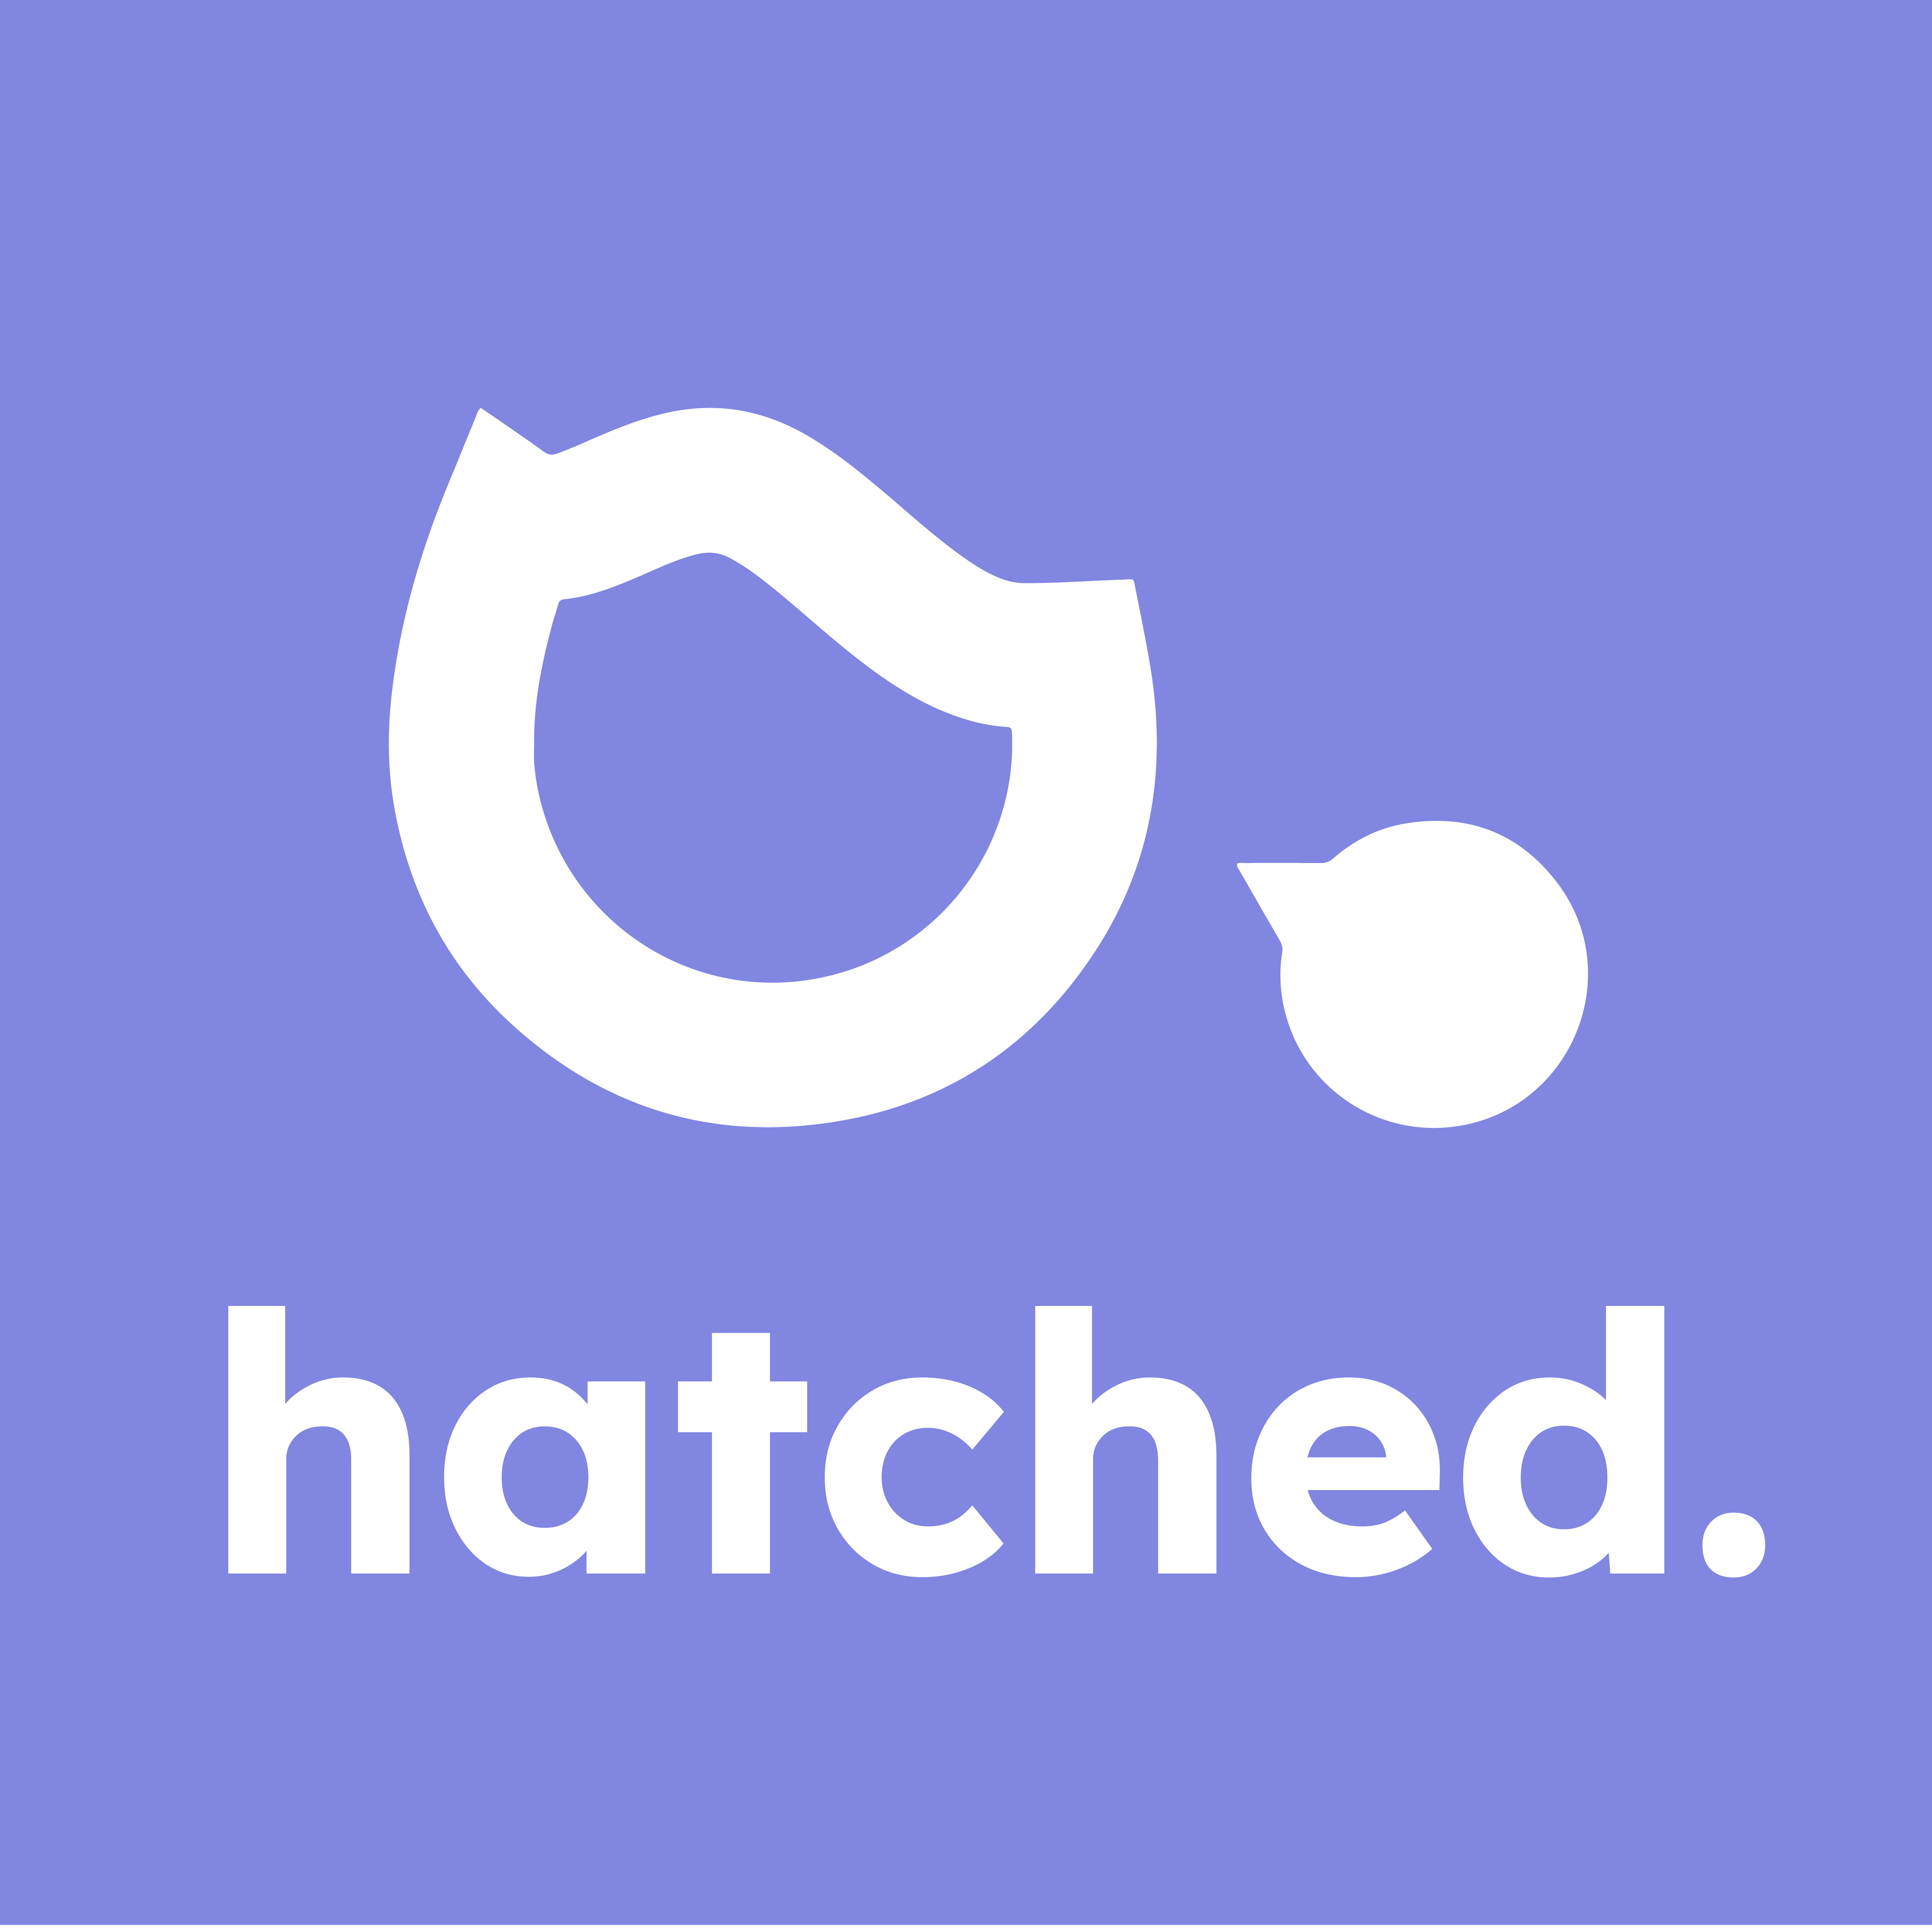 Hatched's logo